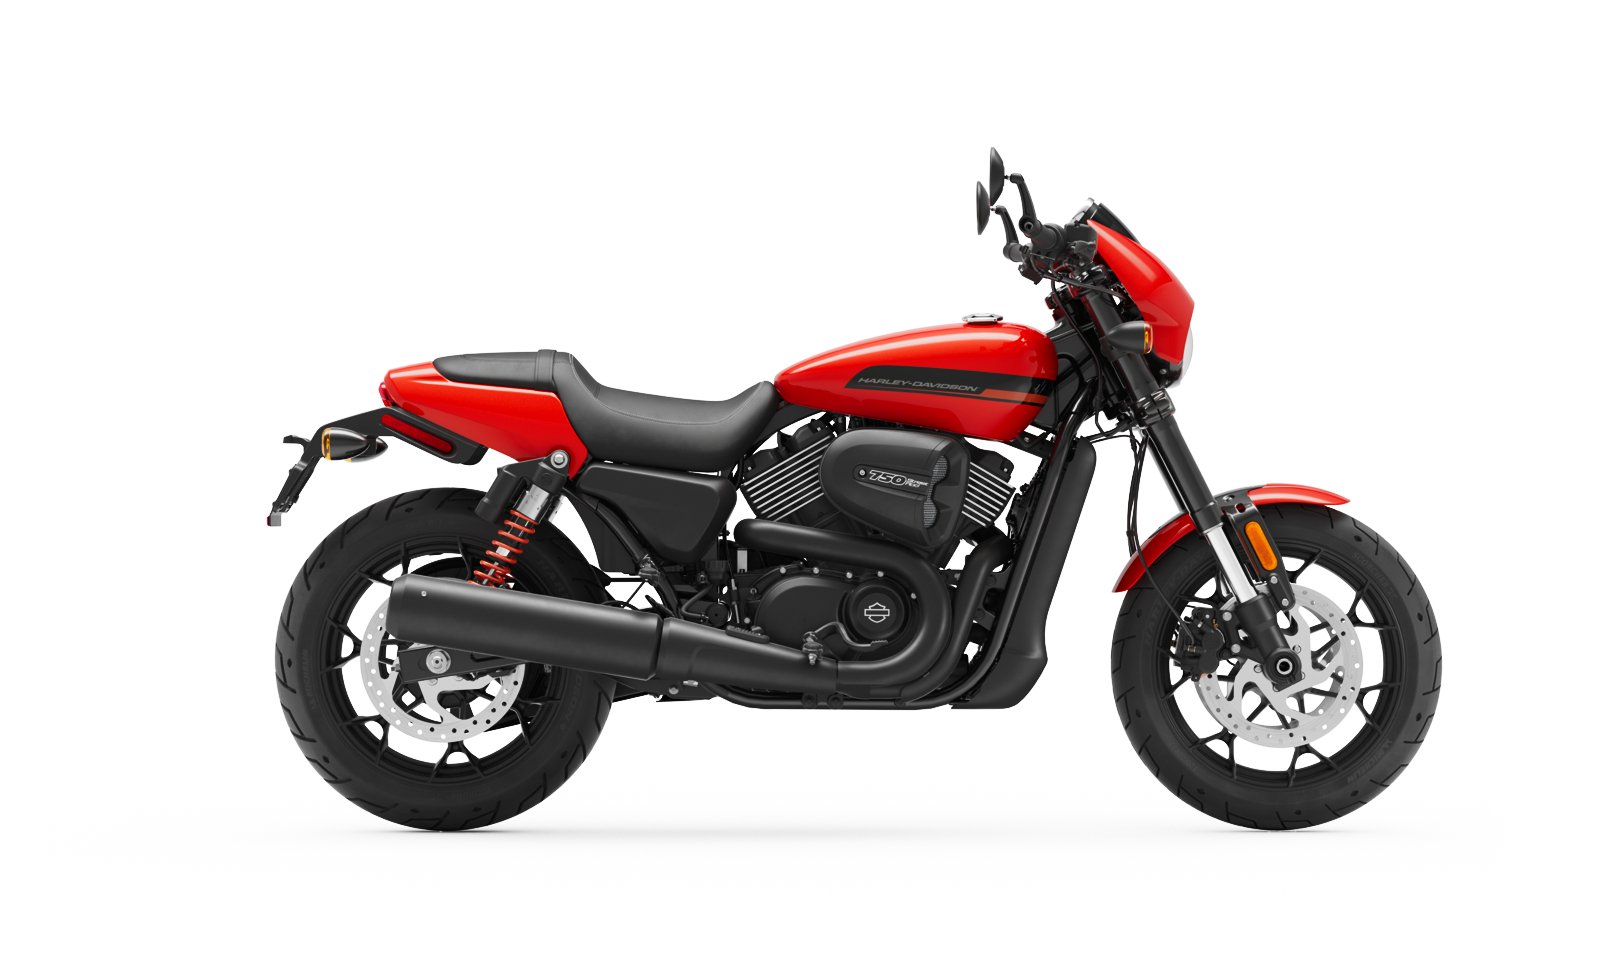 2020 Street Rod Motorcycle Harley Davidson United States